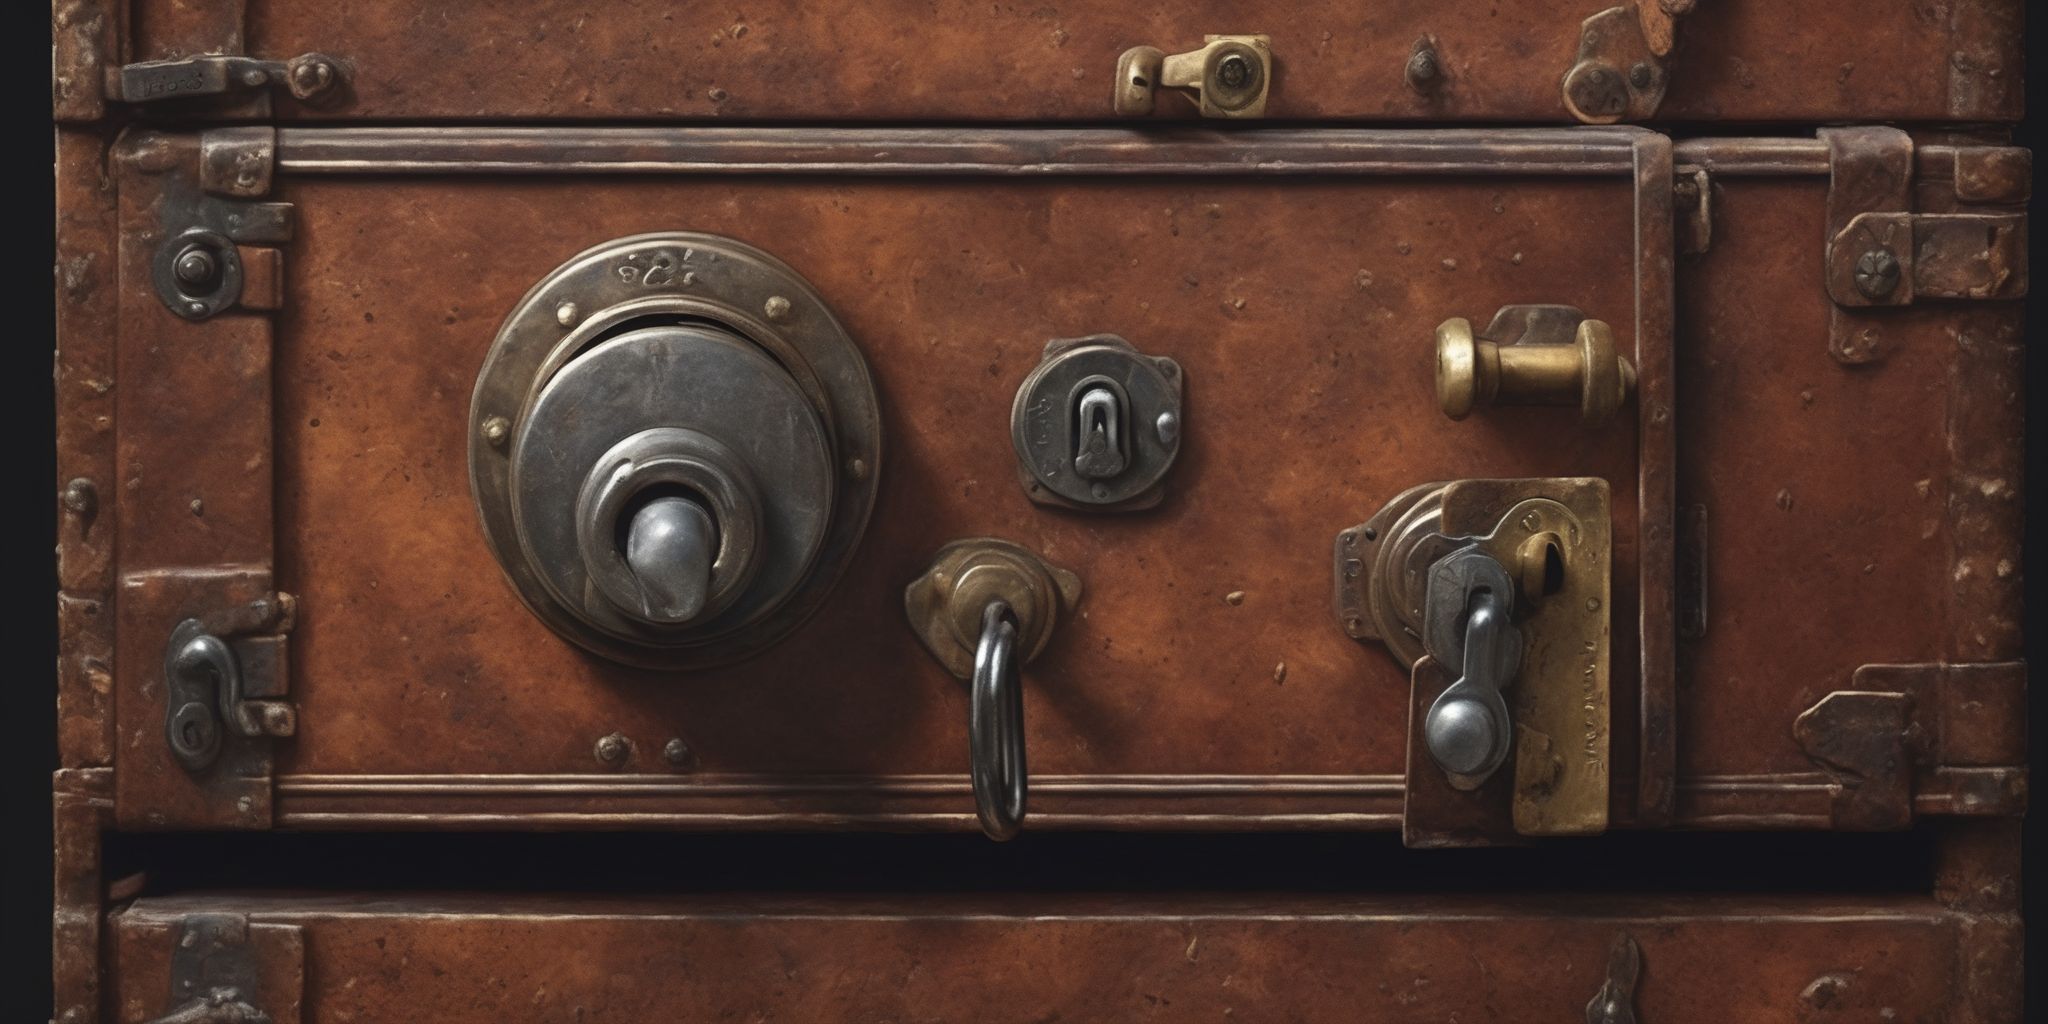 Lockbox  in realistic, photographic style